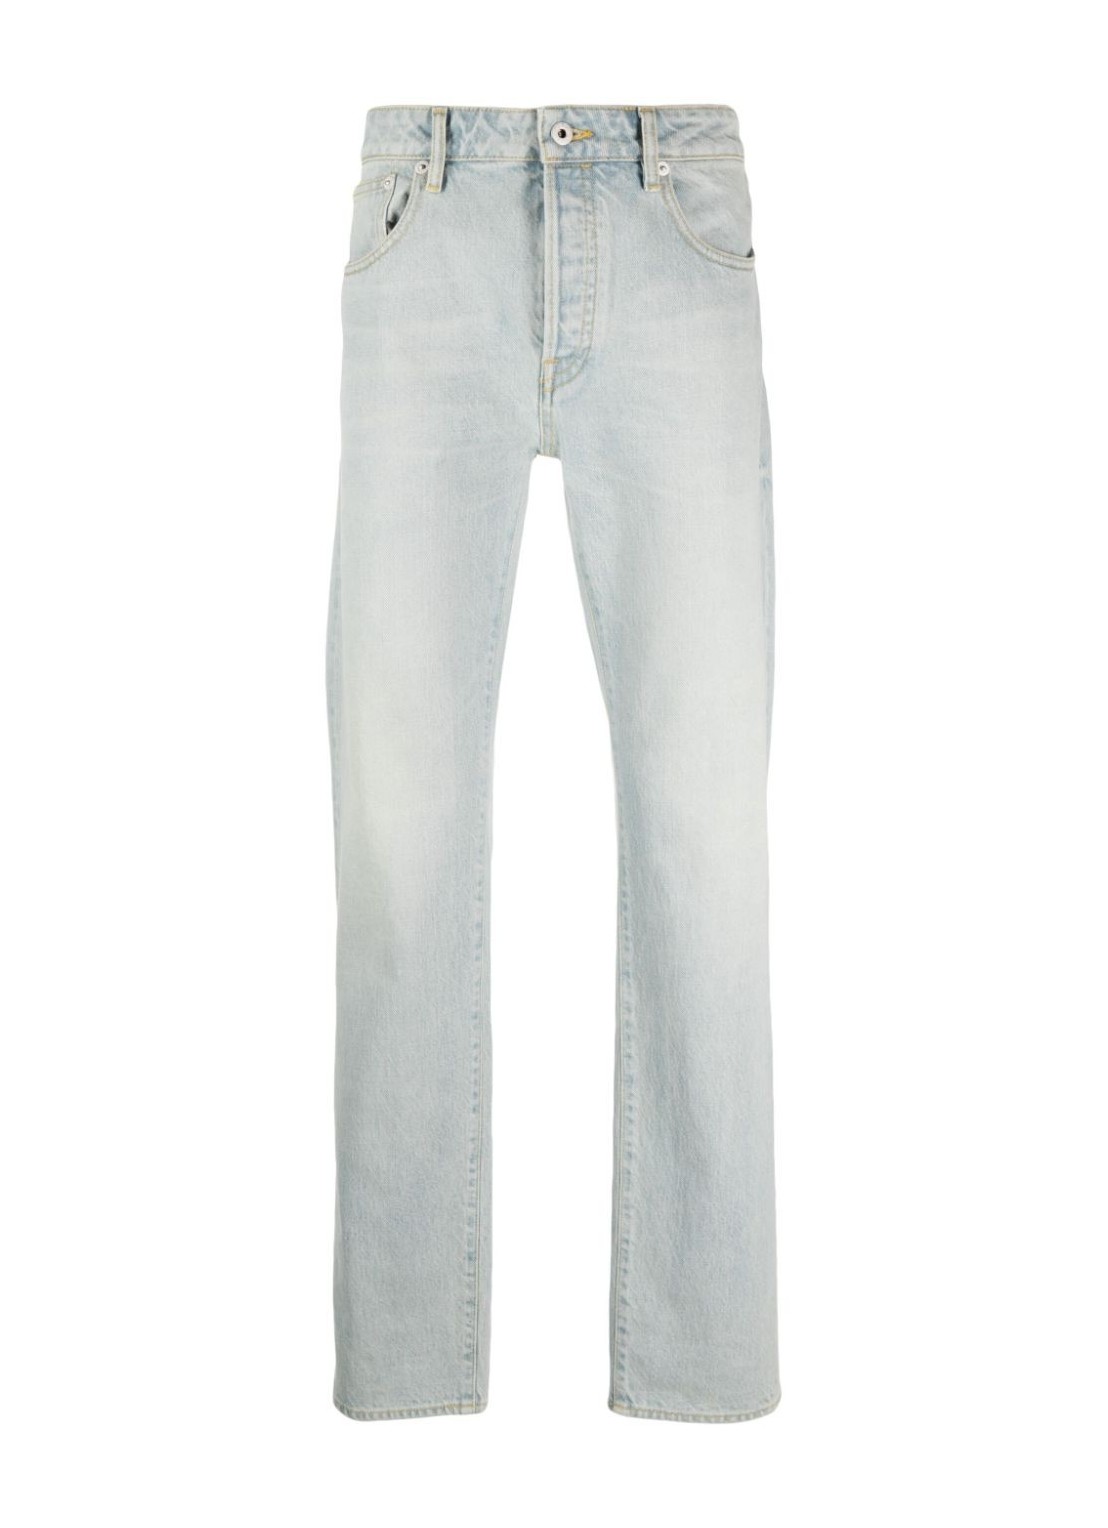 Pantalon jeans kenzo denim man medium stone bara slim jeans fd65dp1016a8 ds talla Azul
 